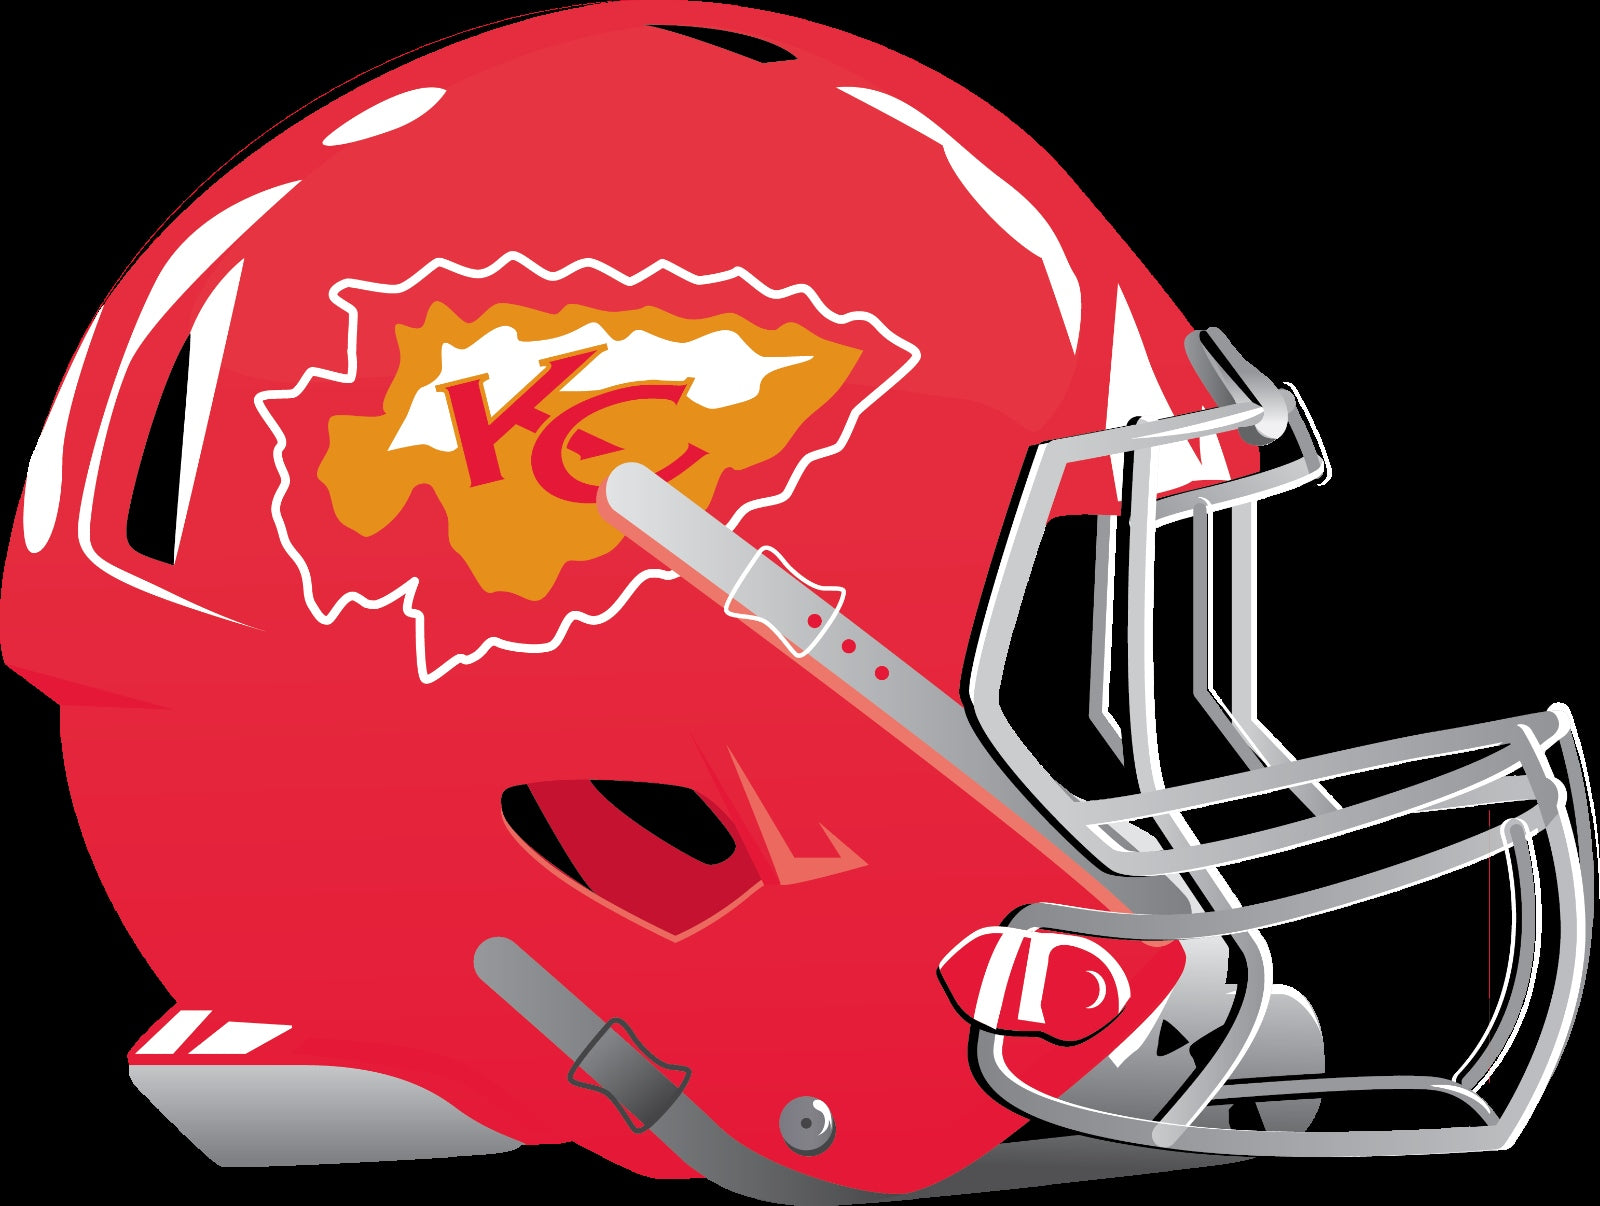 Kansas City Chiefs Alternate Future Helmet logo Vinyl Decal / Sticker